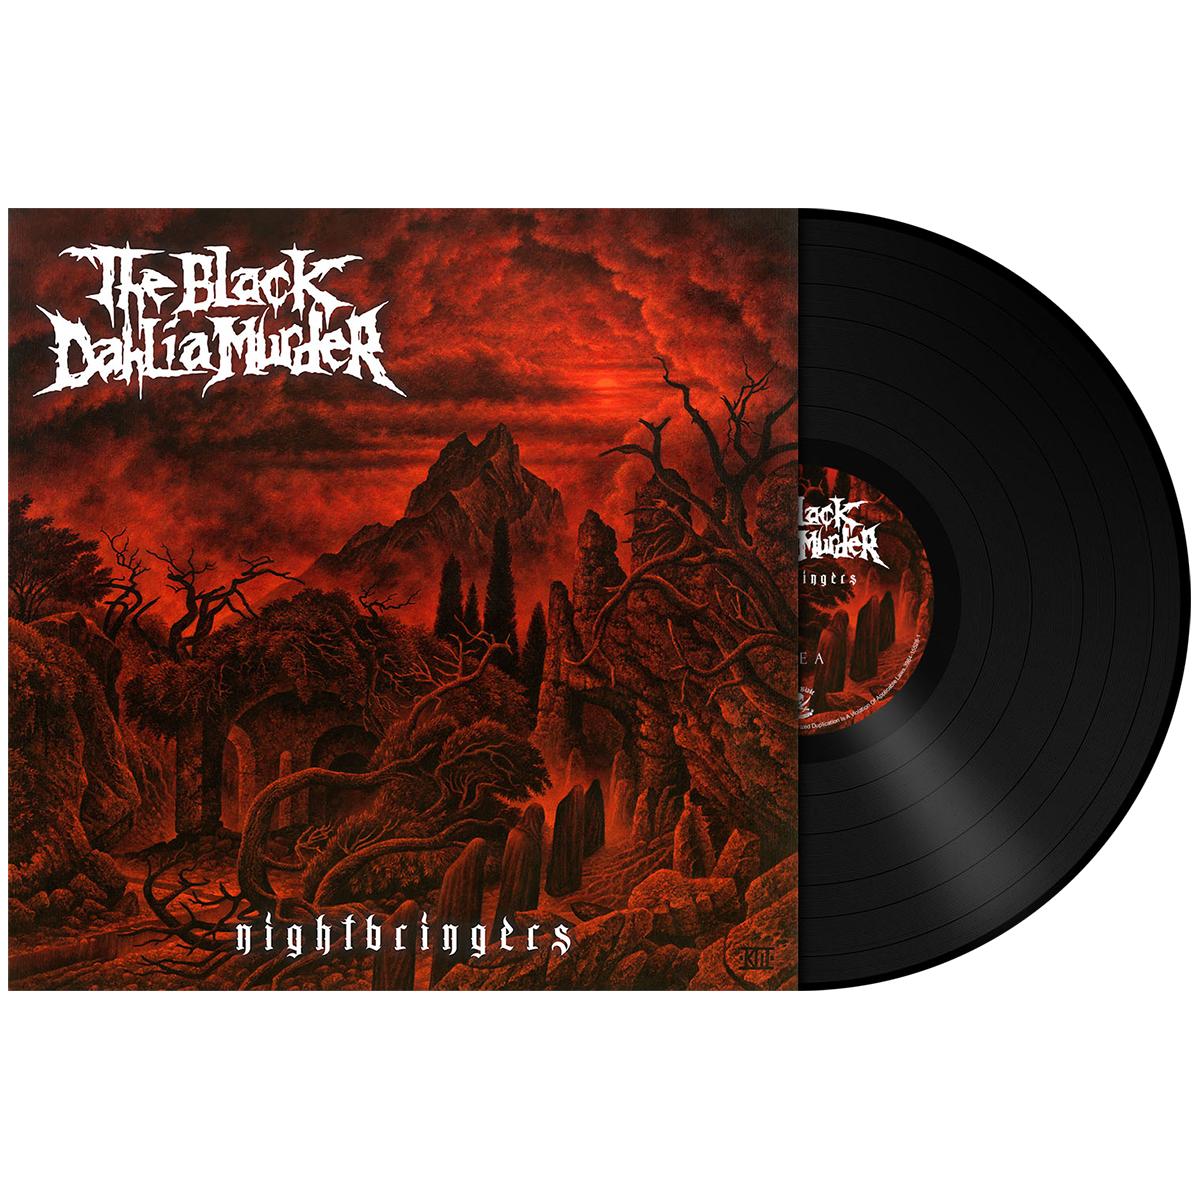 The Black Dahlia Murder "Nightbringers" Black Vinyl